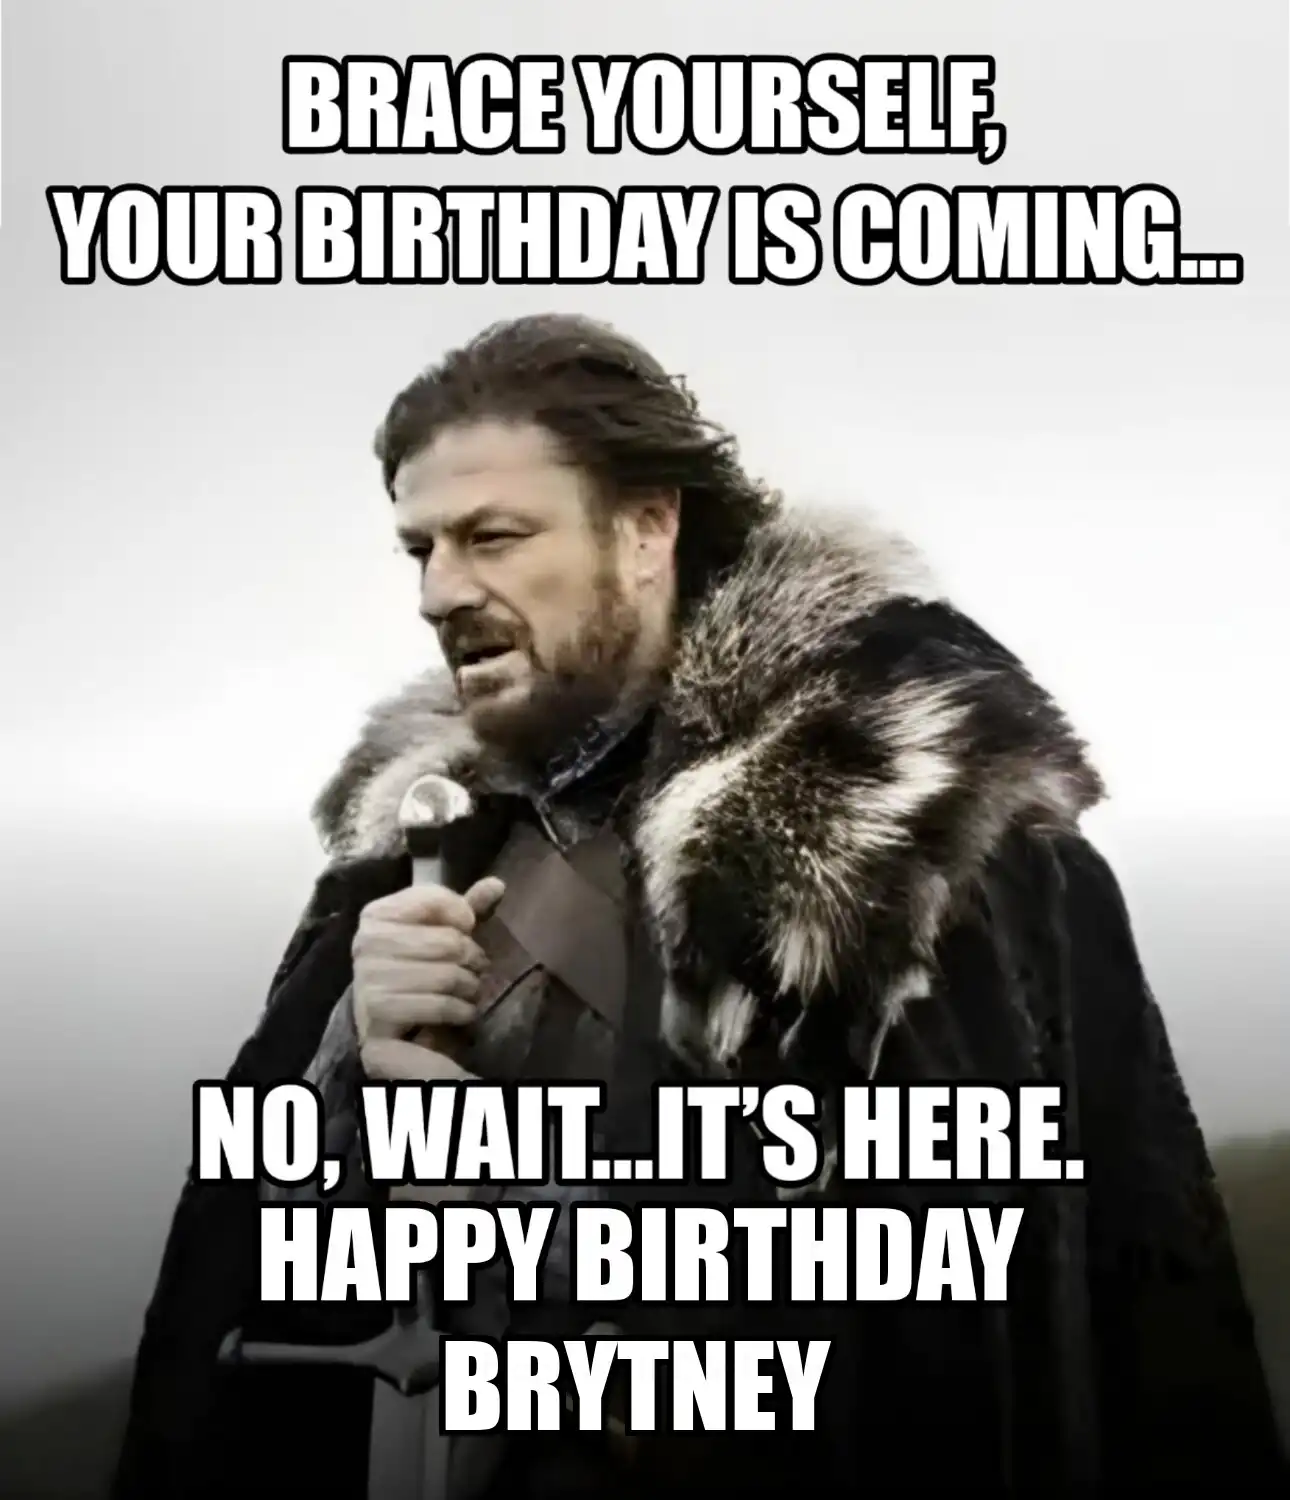 Happy Birthday Brytney Brace Yourself Your Birthday Is Coming Meme